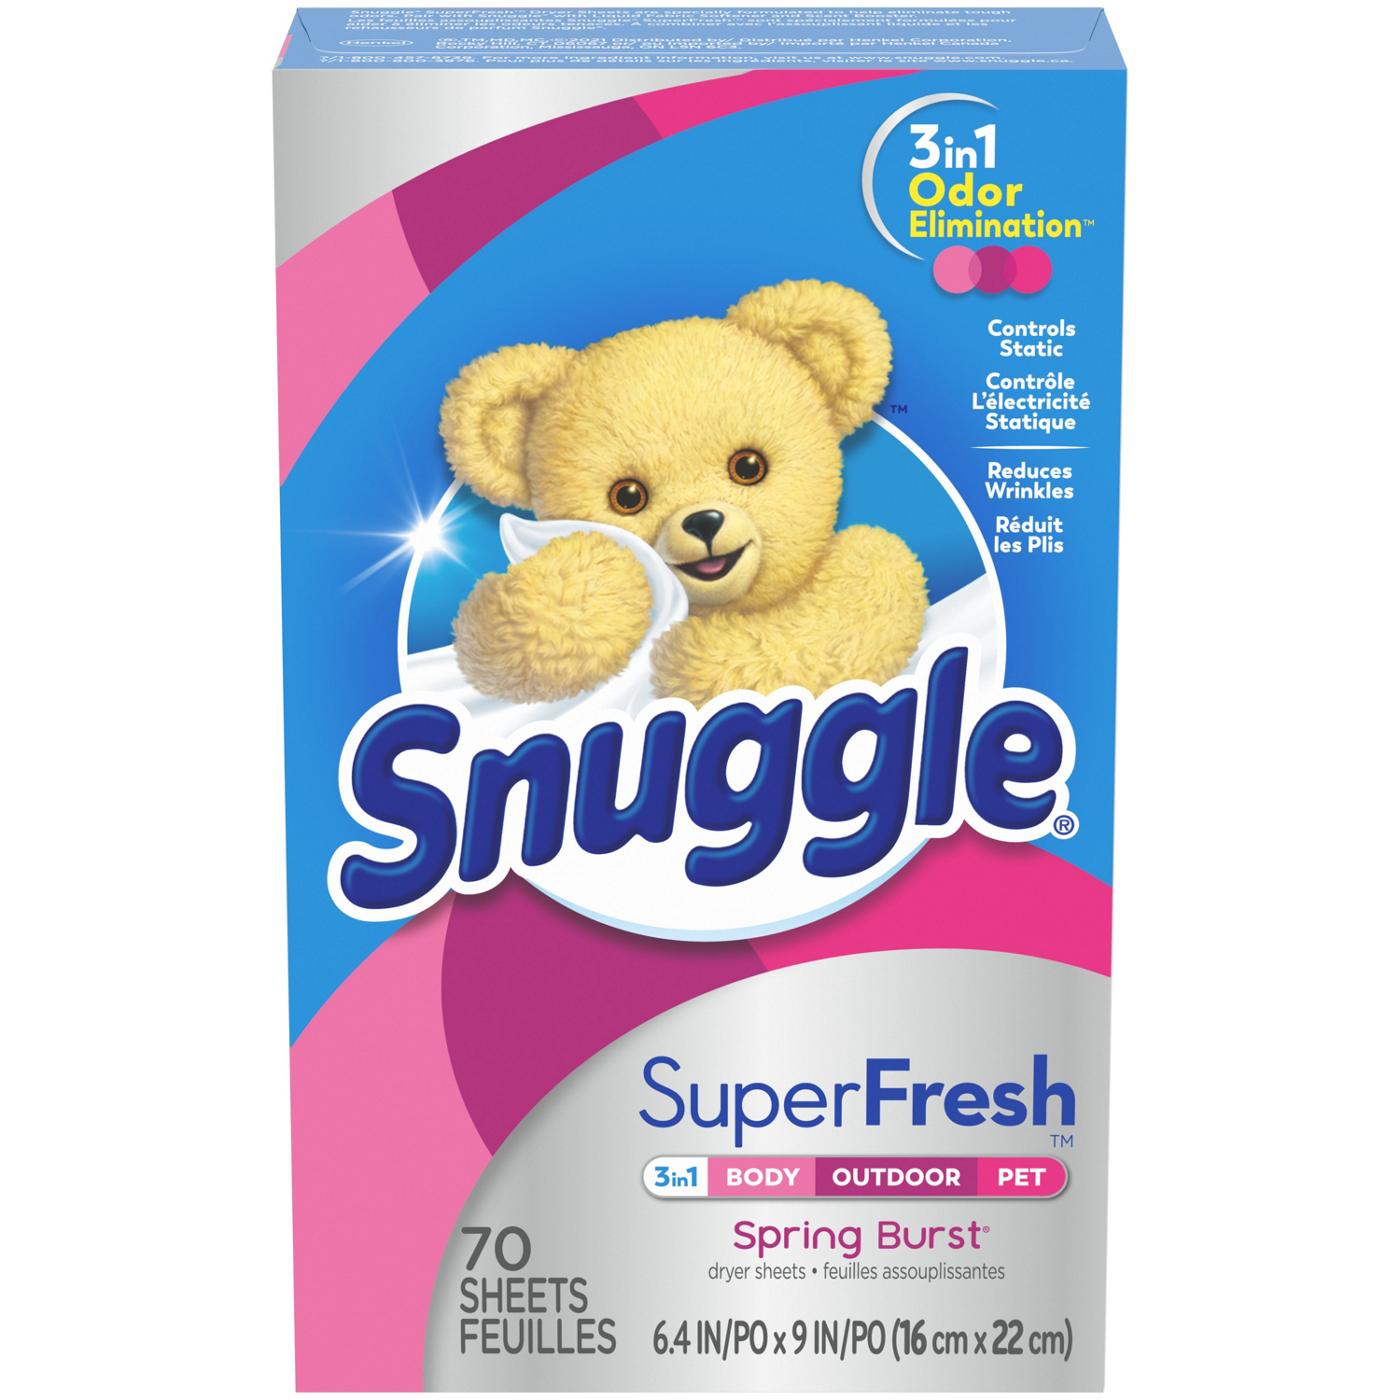 Snuggle SuperFresh Fabric Softener Dryer Sheets - Spring Burst; image 2 of 3